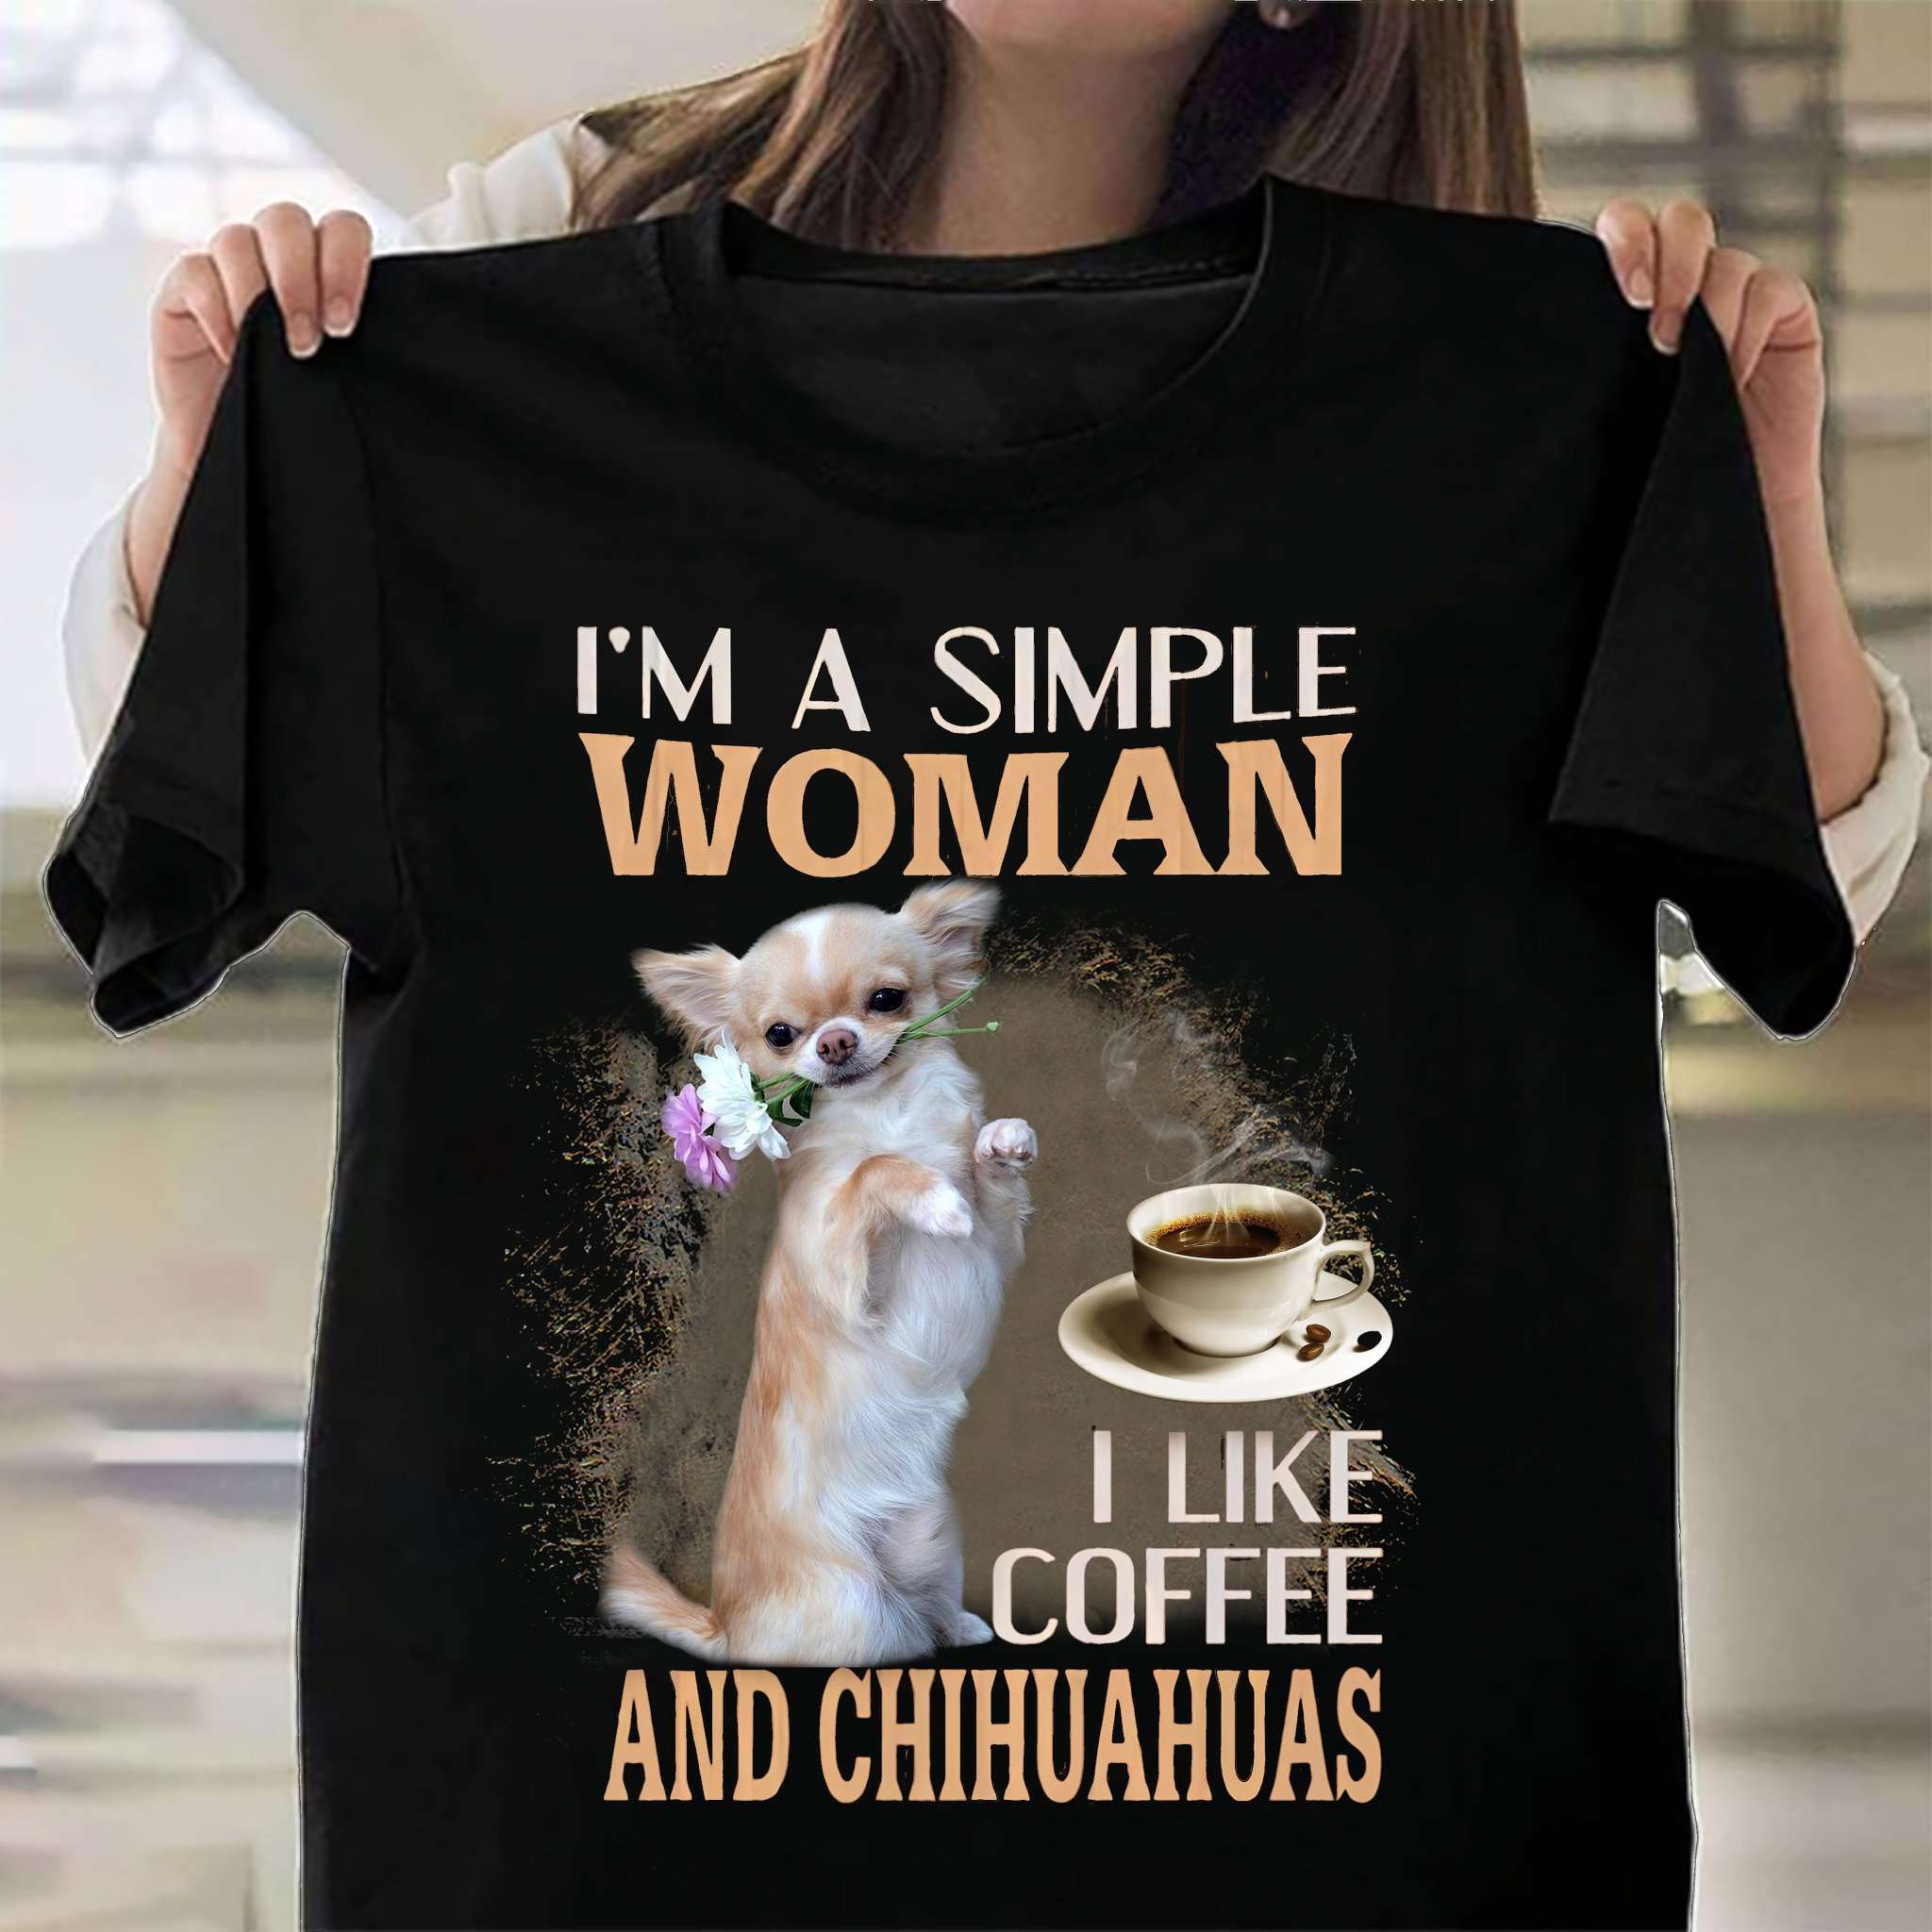 I'm a simple woman I like coffee and chihuahuas - Woman loves dog